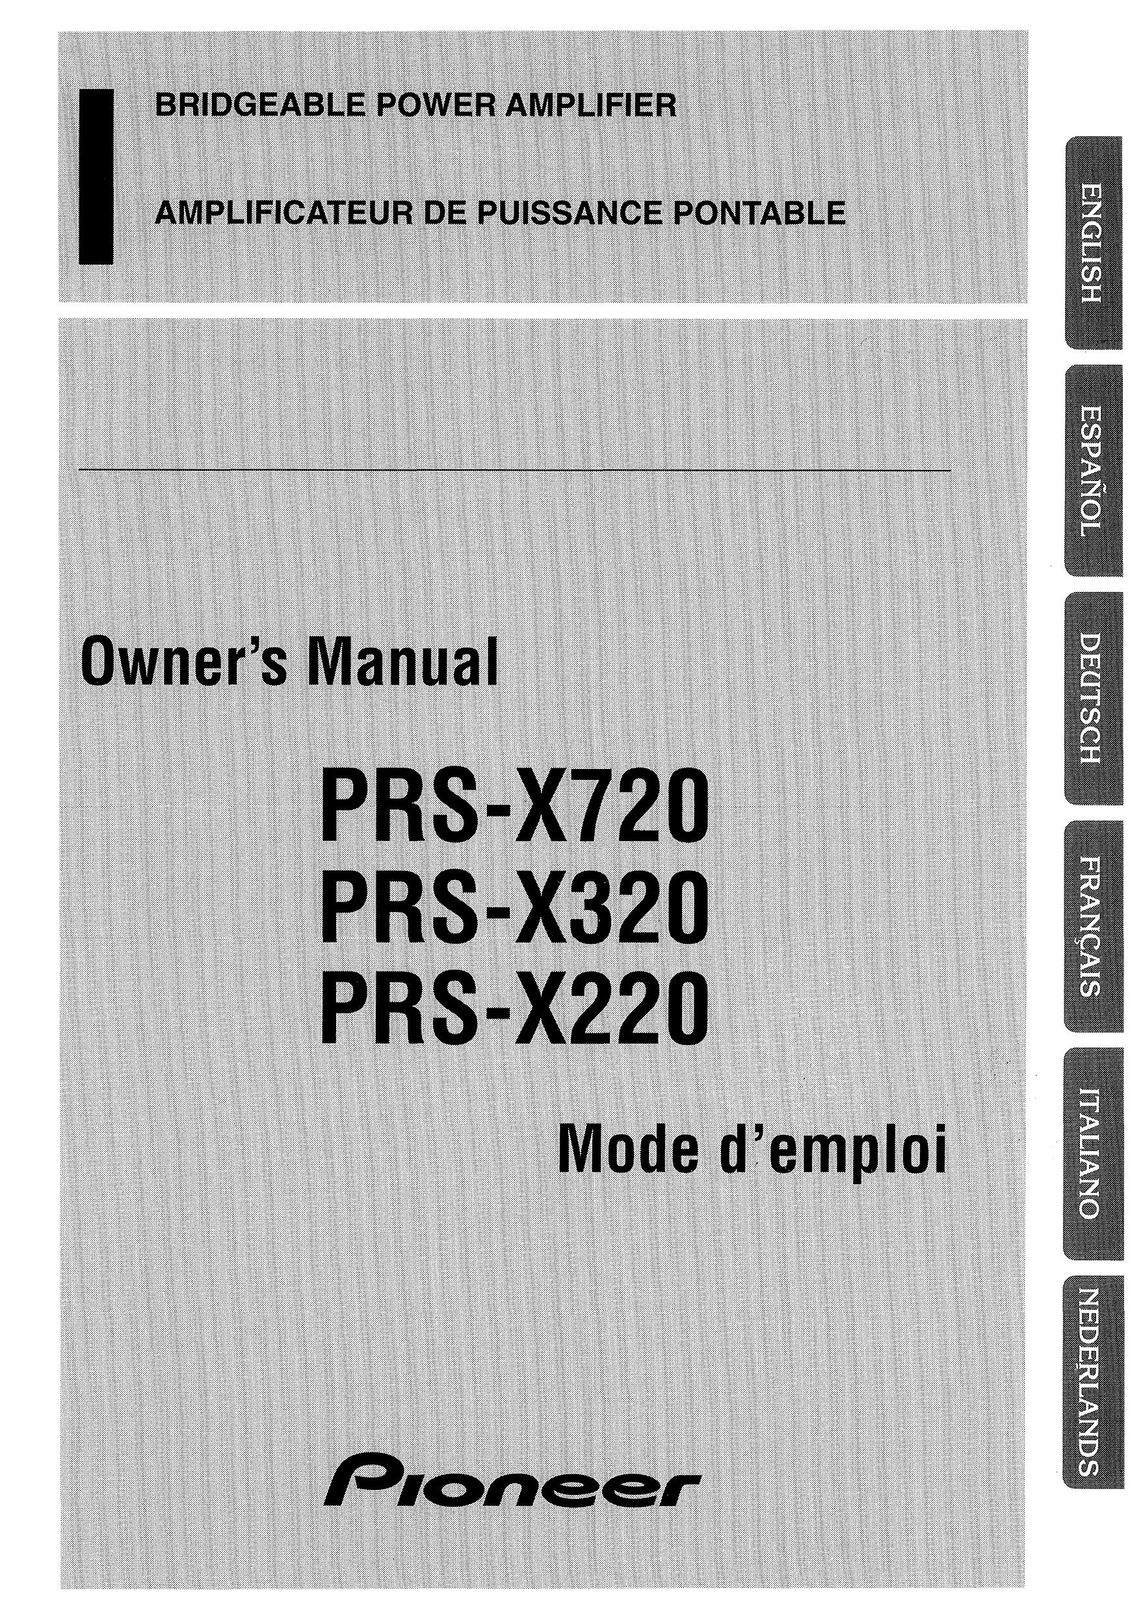 Pioneer PRS-X320 Stereo Amplifier User Manual